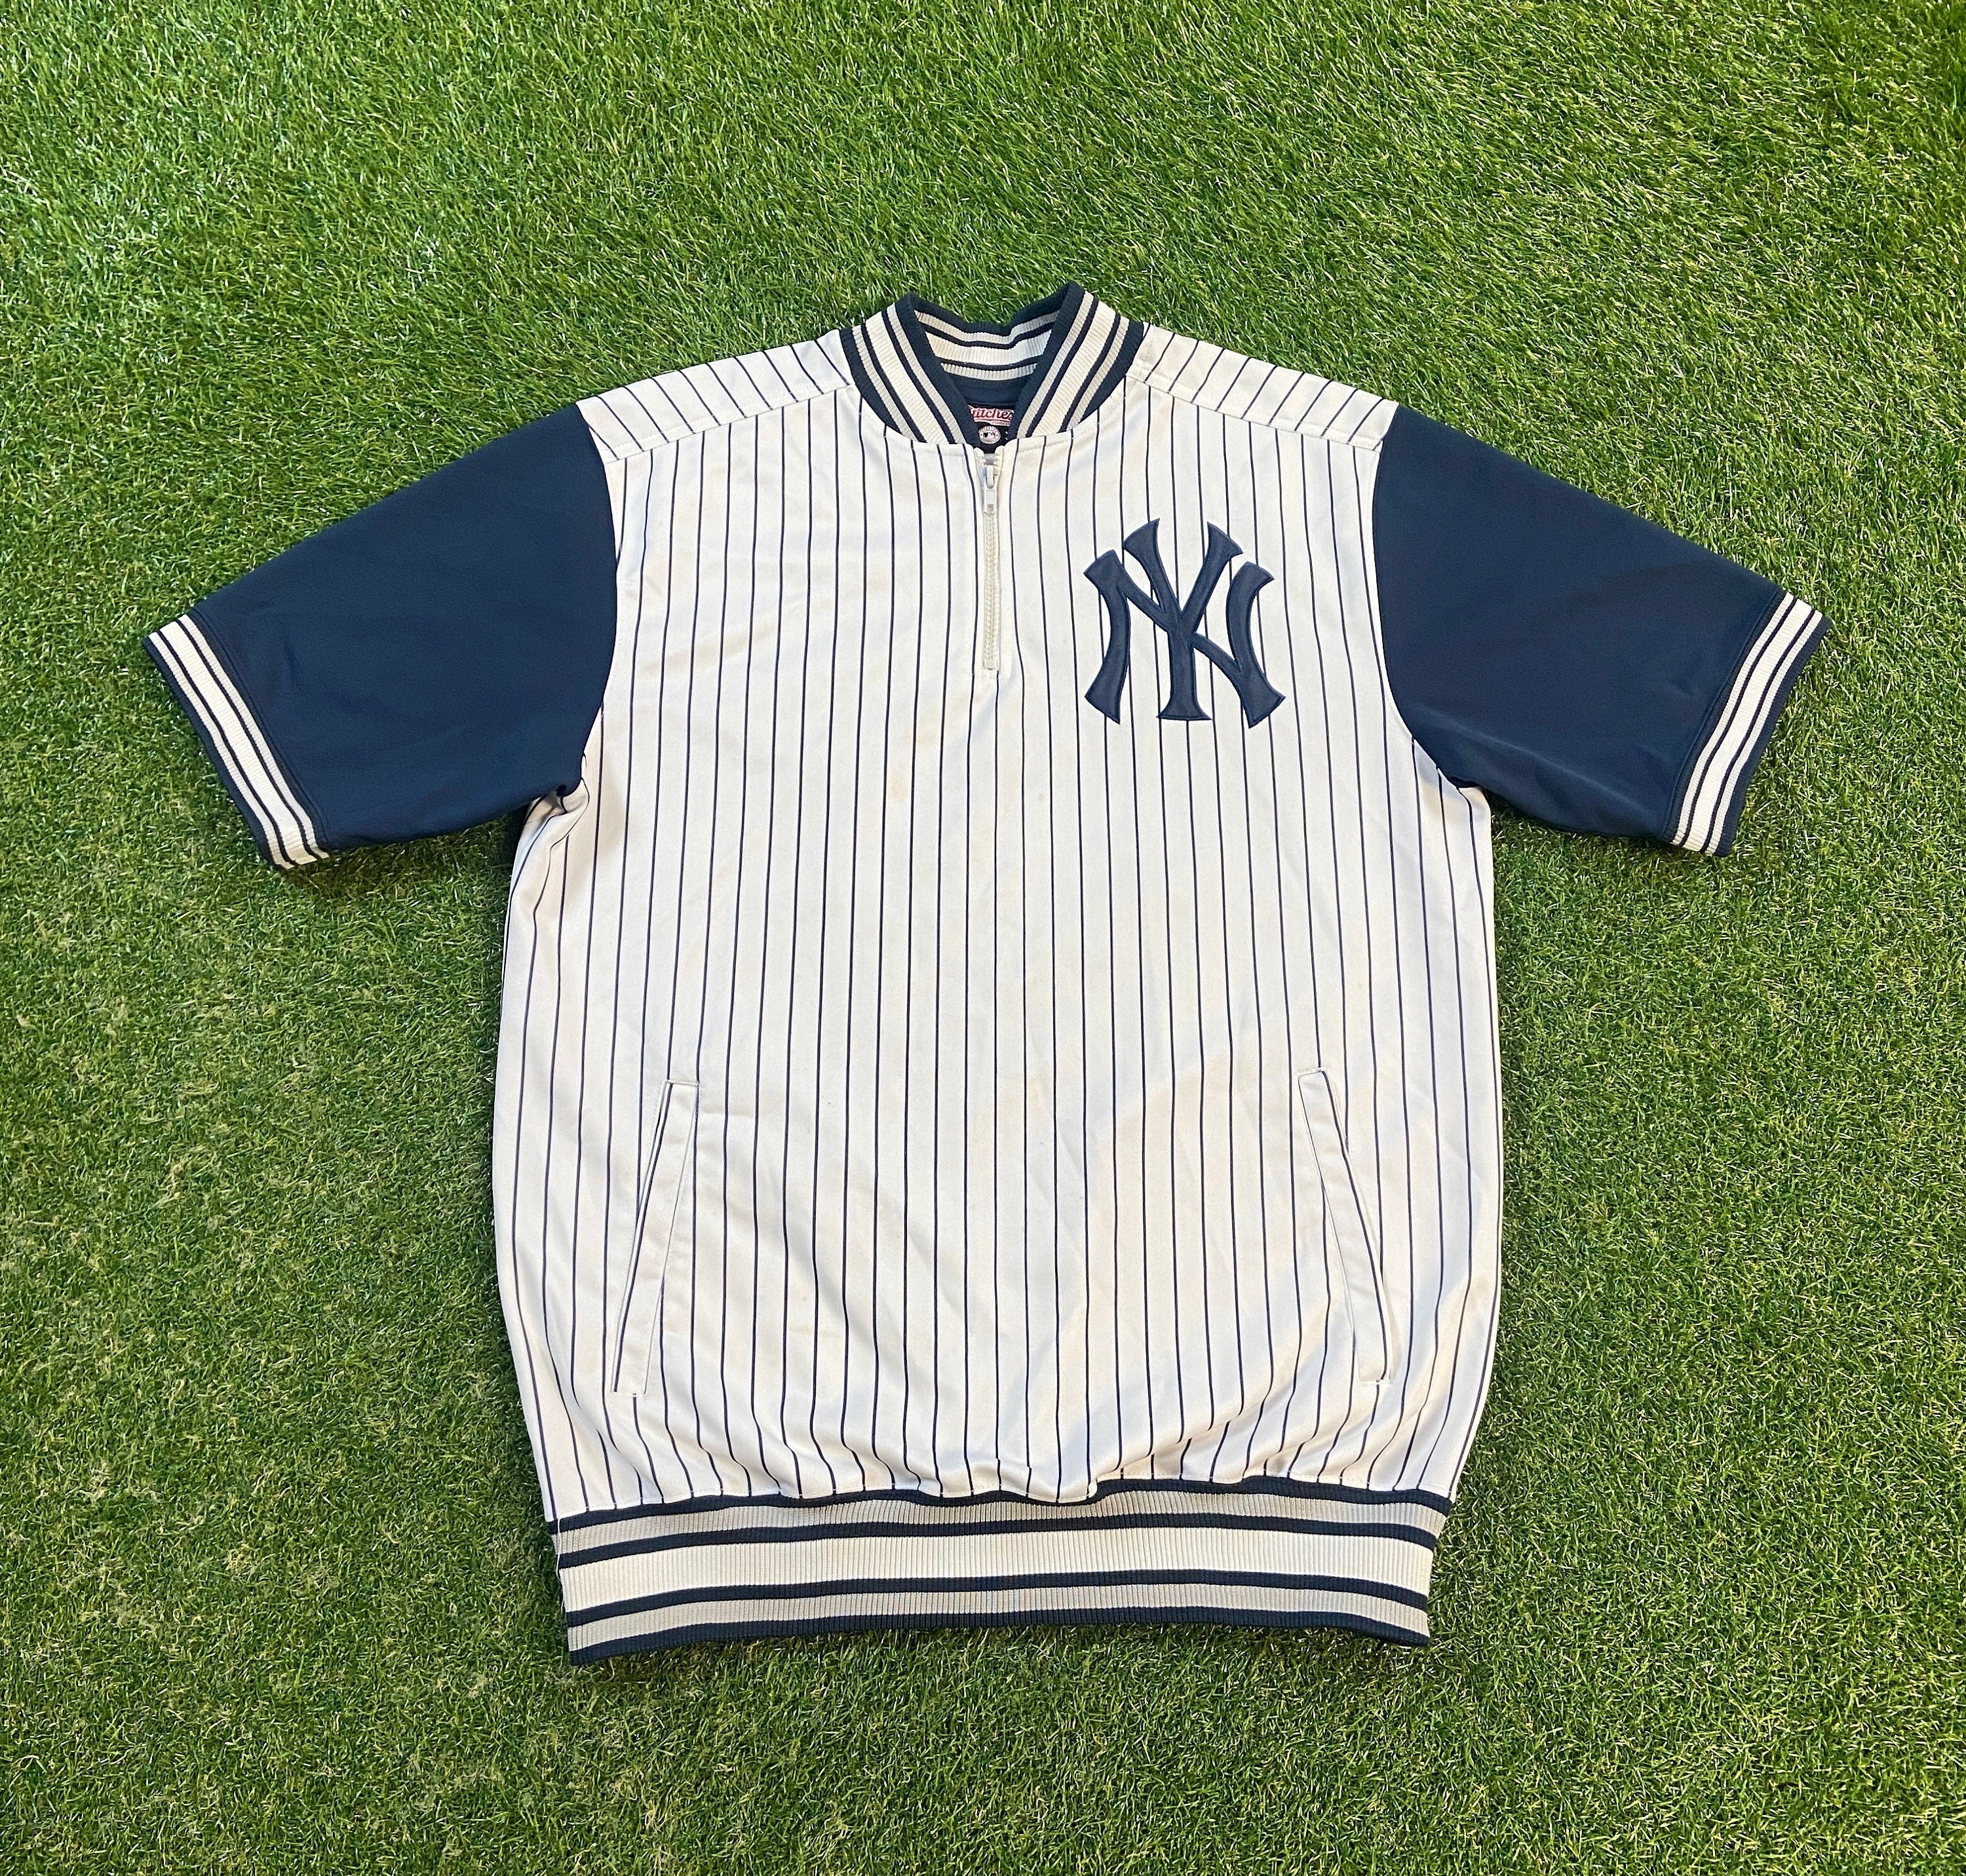 Alfonso Soriano Lapel Hat Pin New York Yankees Jersey #12 MLB Baseball